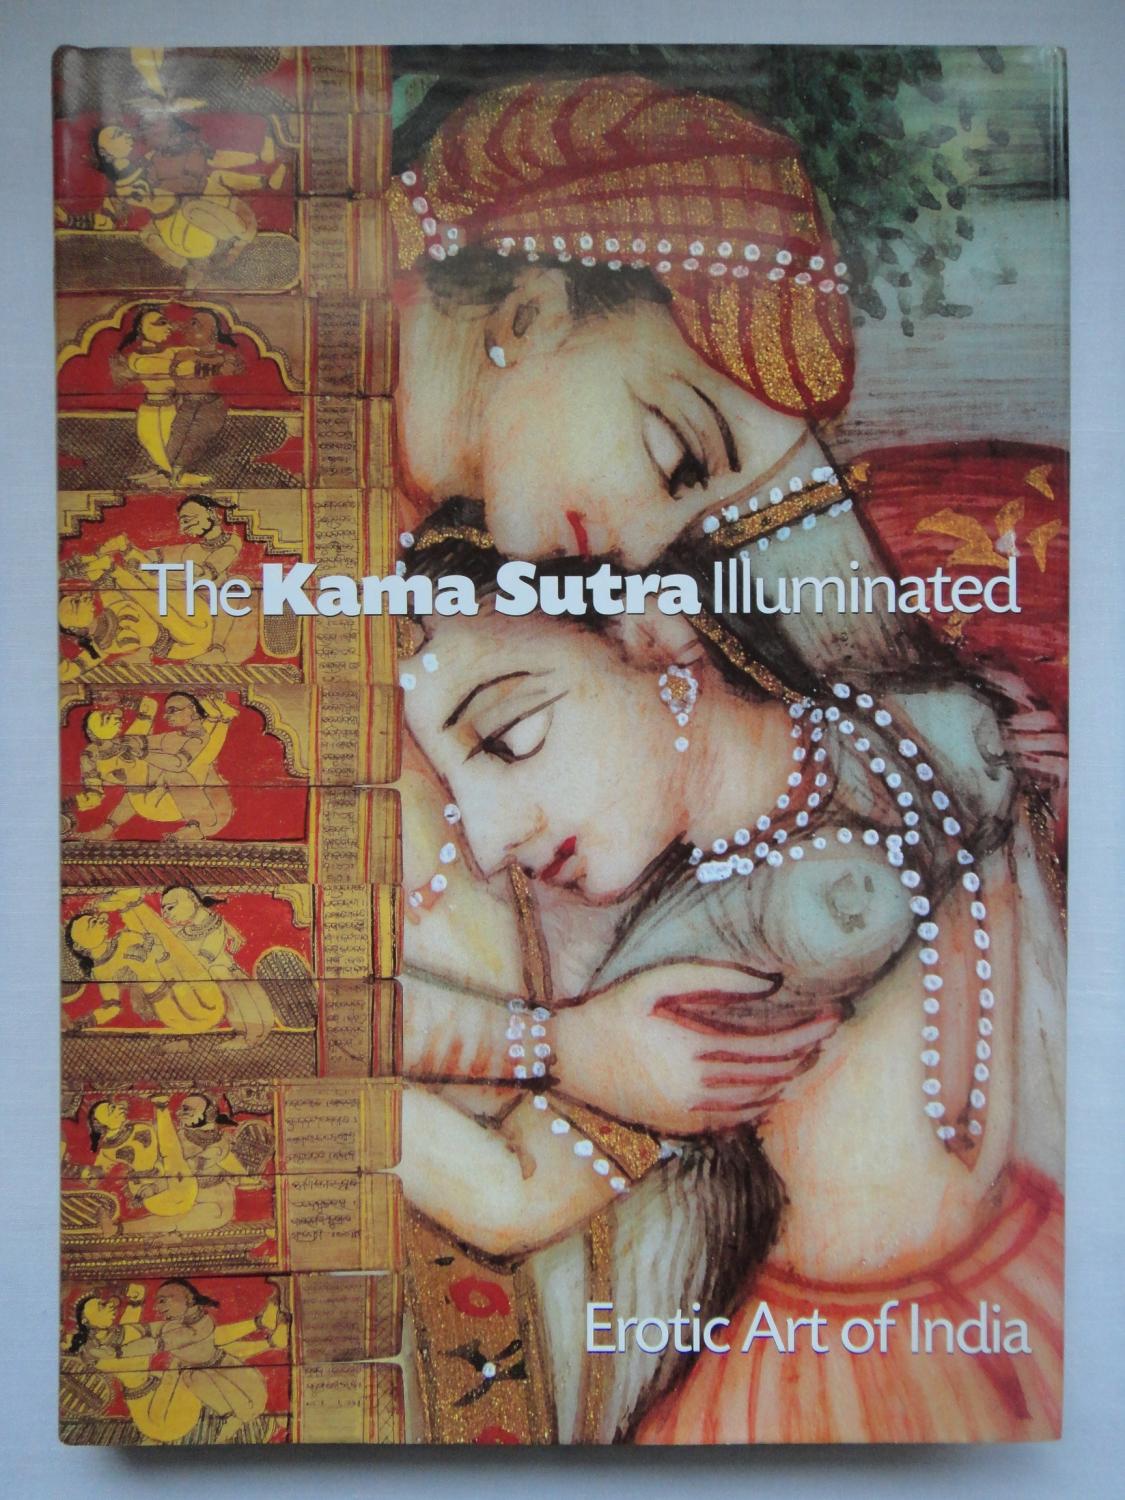 Kama india the of illuminated: erotic sutra art Exhibition